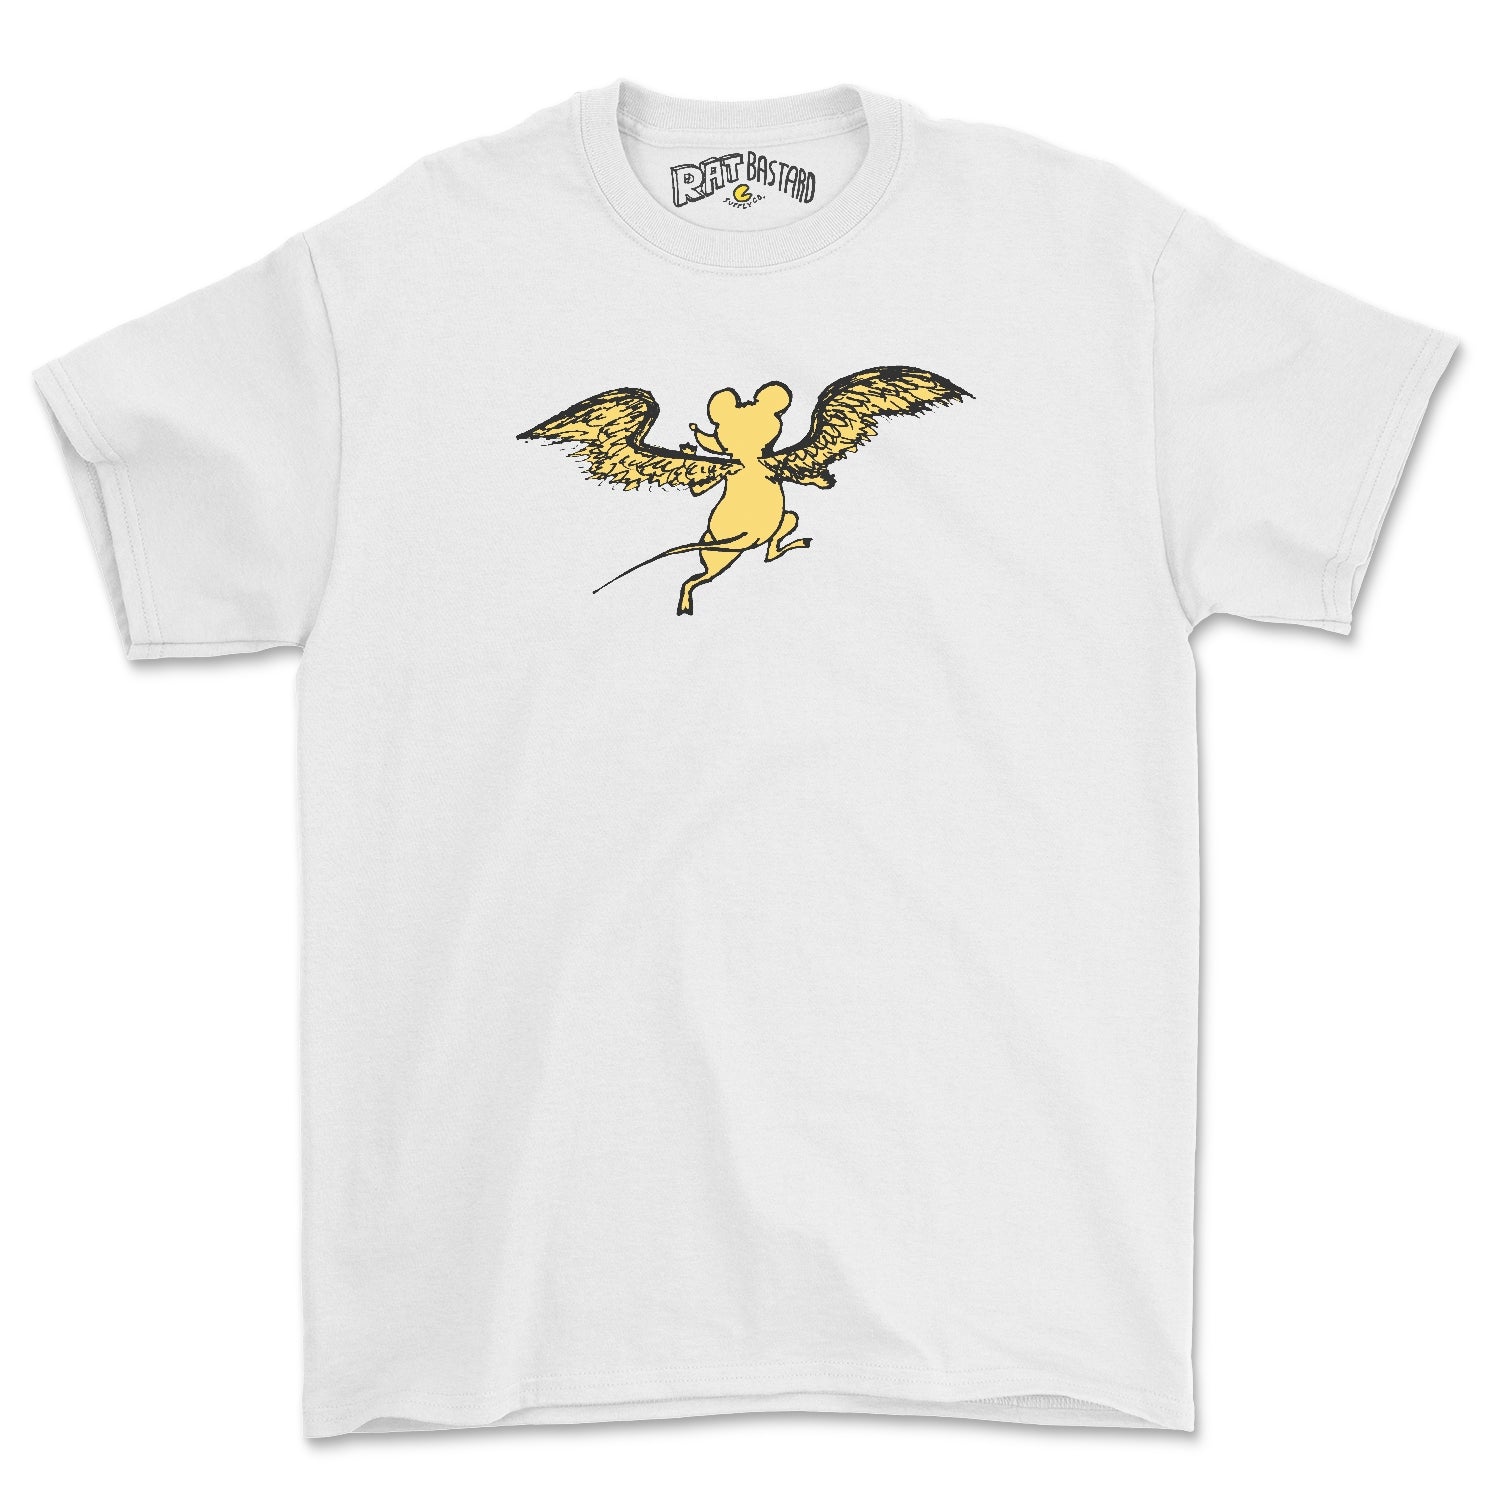 Flying Rat 2.0 Graphic Tee Shirt